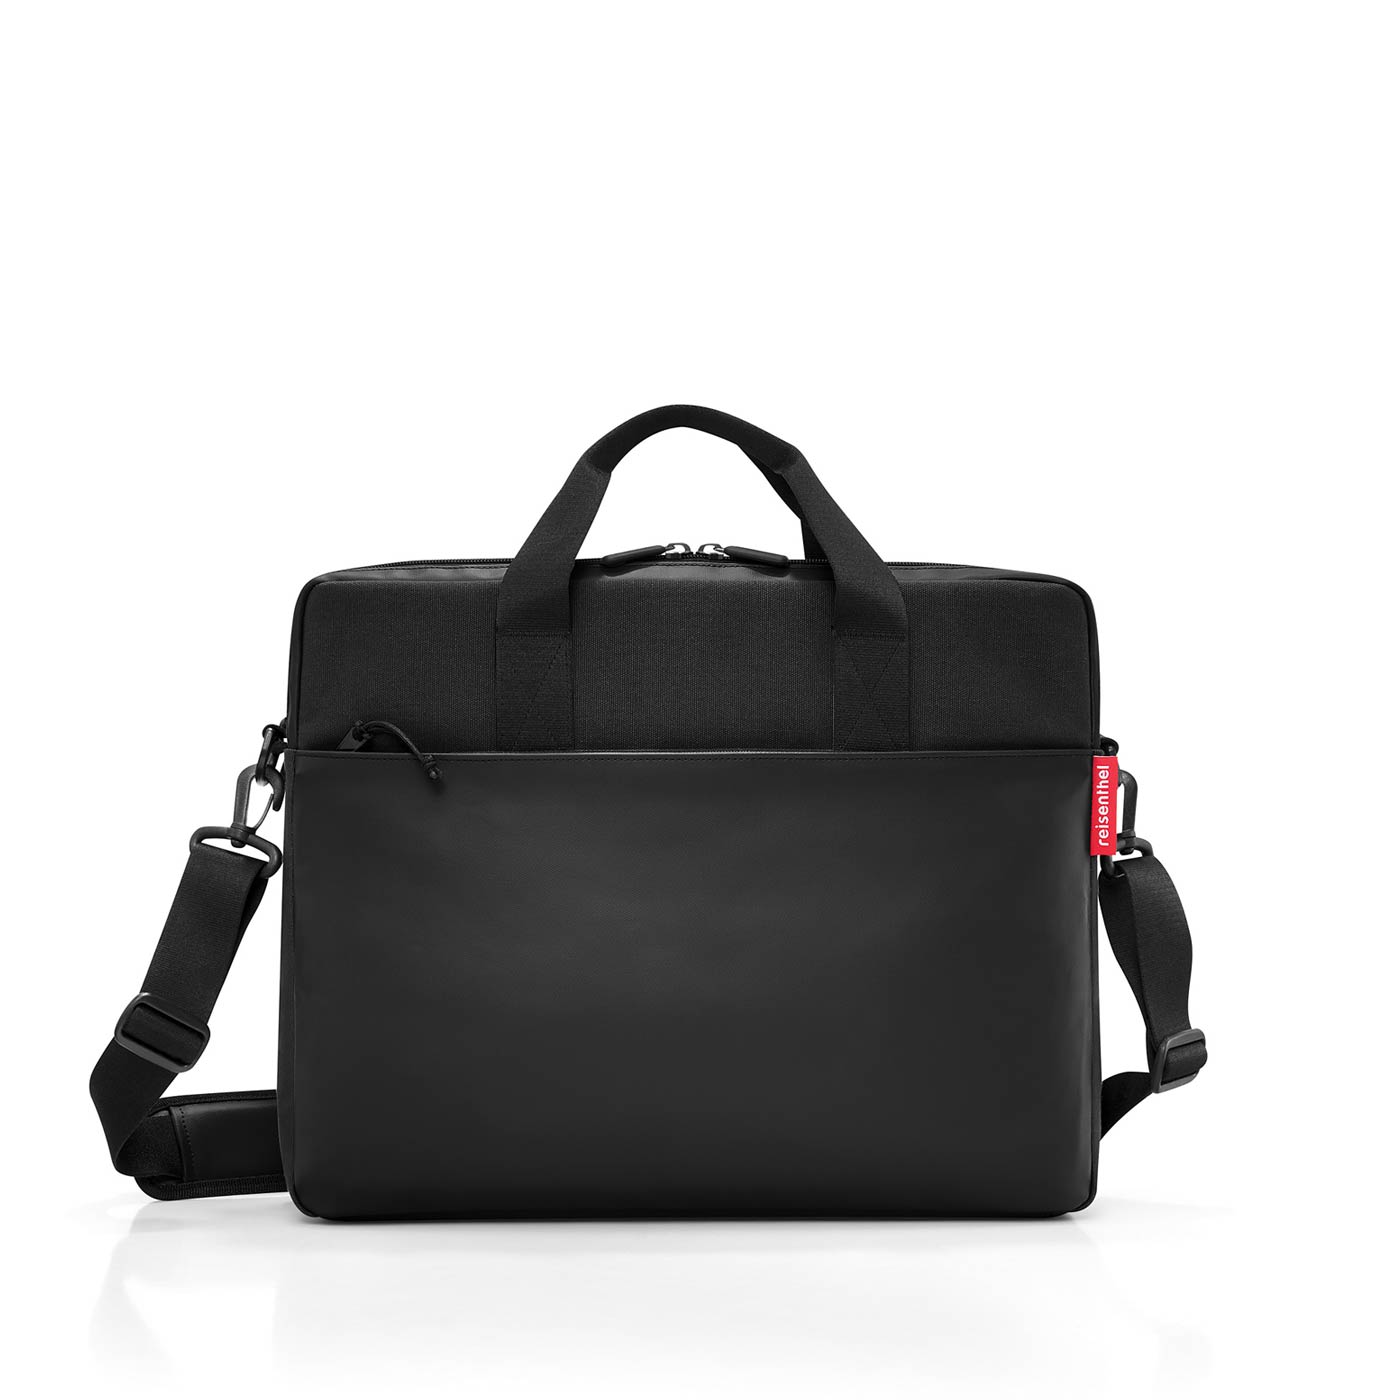 Workbag Black Reisenthel Bag